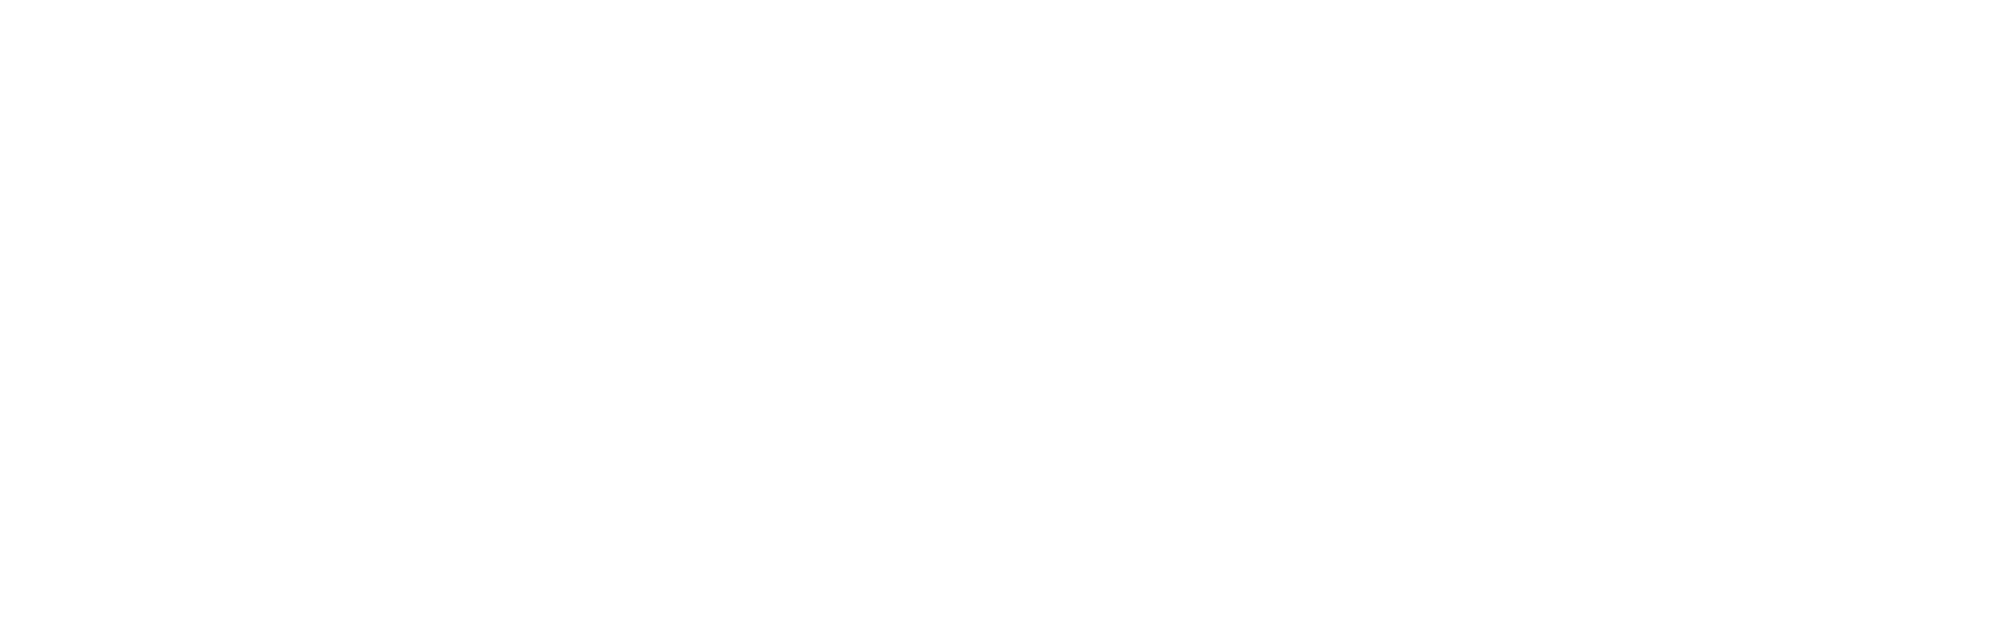 İnterdum velit - Leather harmonica - Premium handmade leather goods